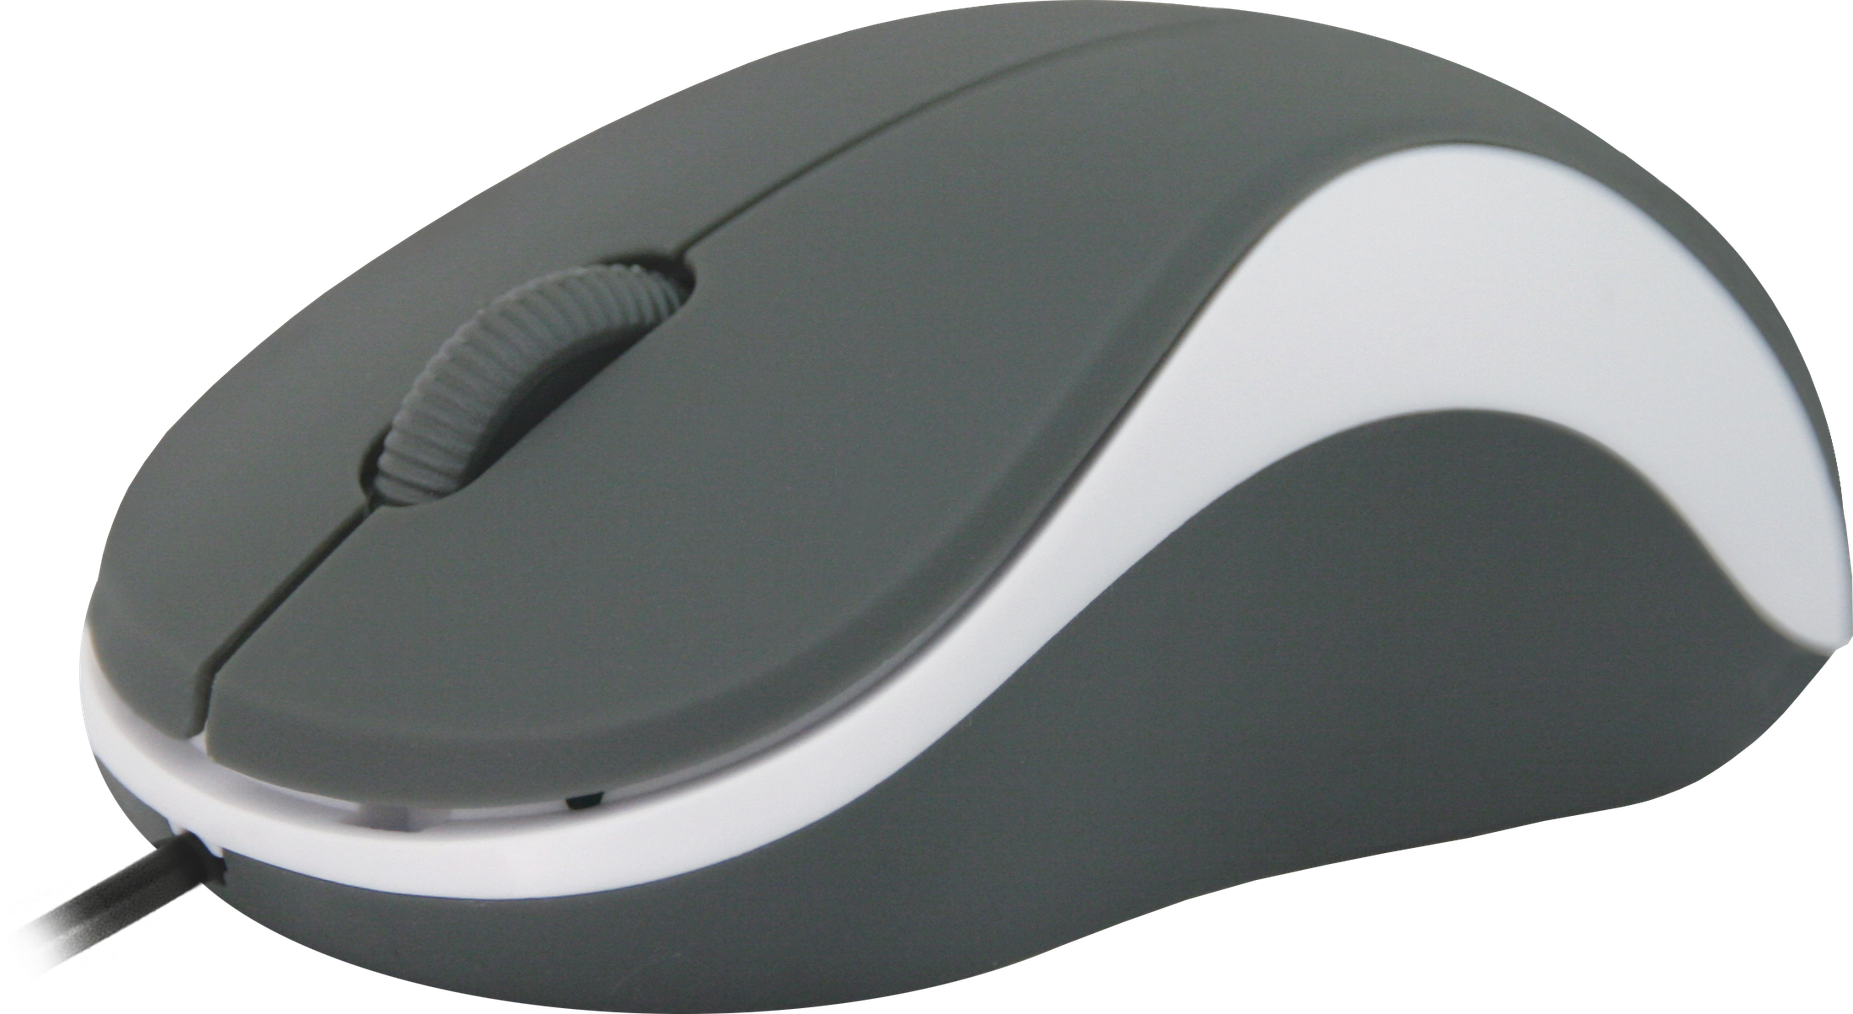 Мышь Defender провод Accura МS-970 серый-белый,3 кн, 1000dpi